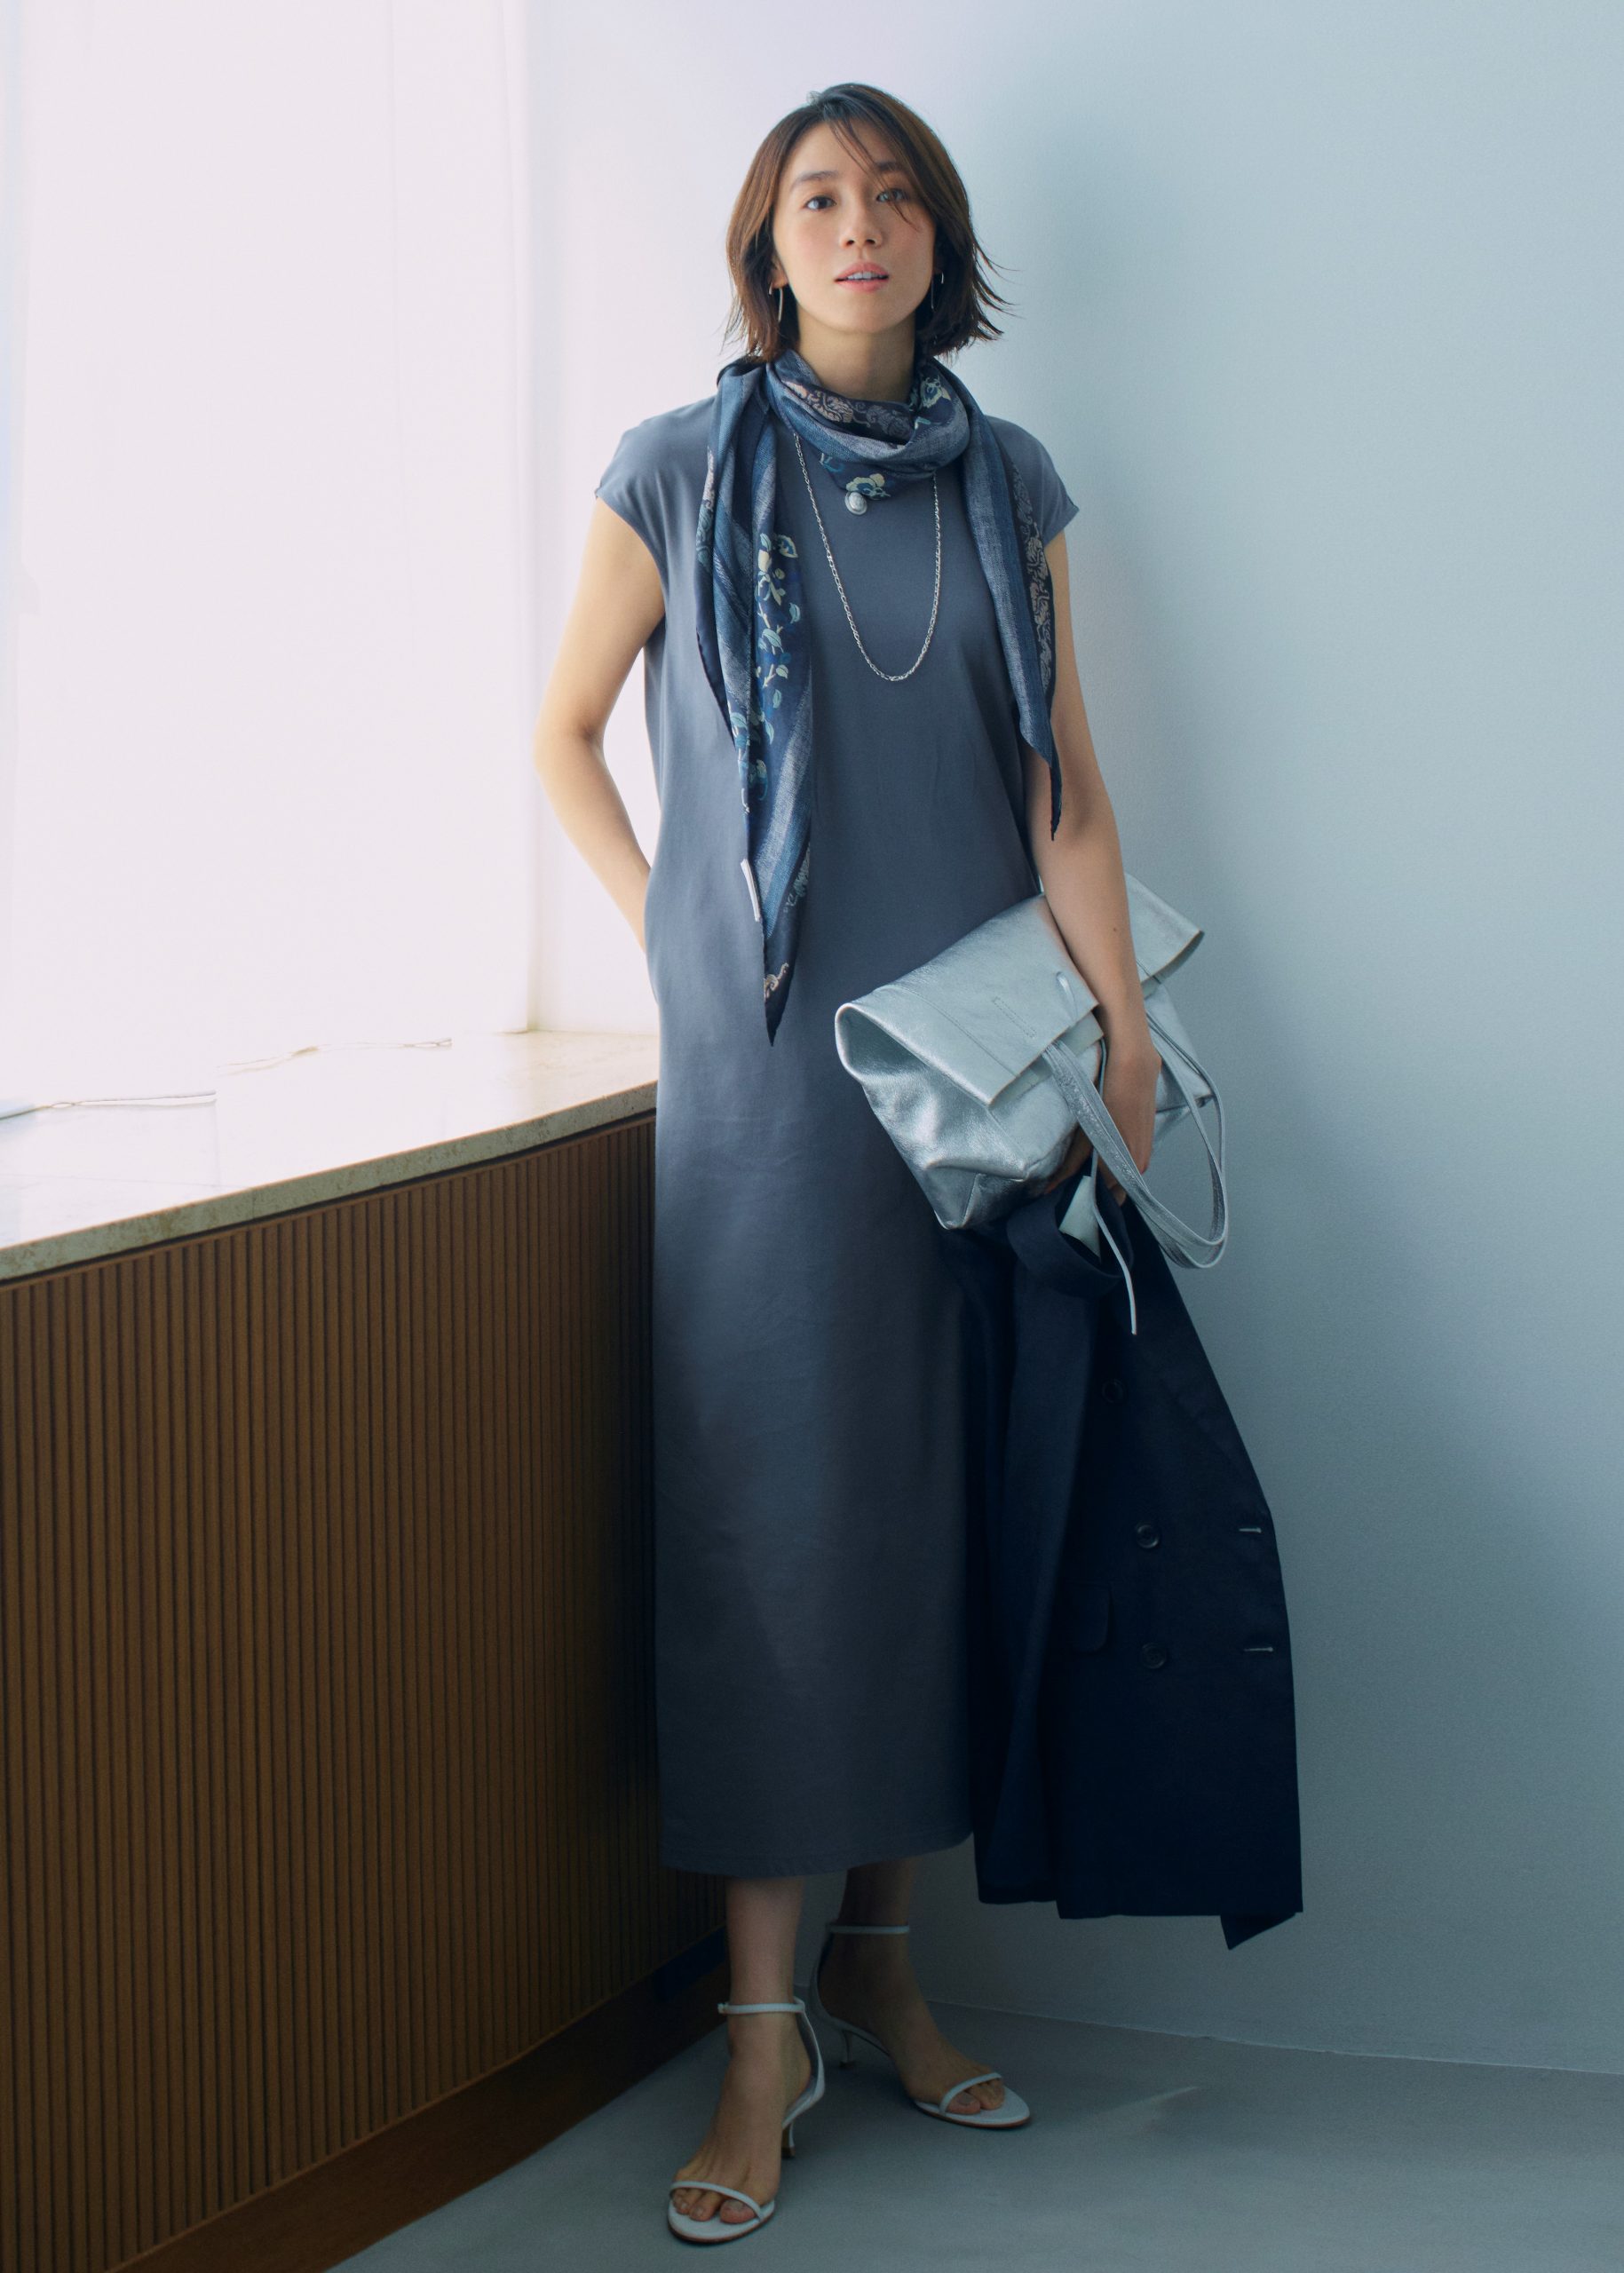 Marisolオリジナルブランド・M7daysの新作「大人グレーなワンピース」【40代ファッション】